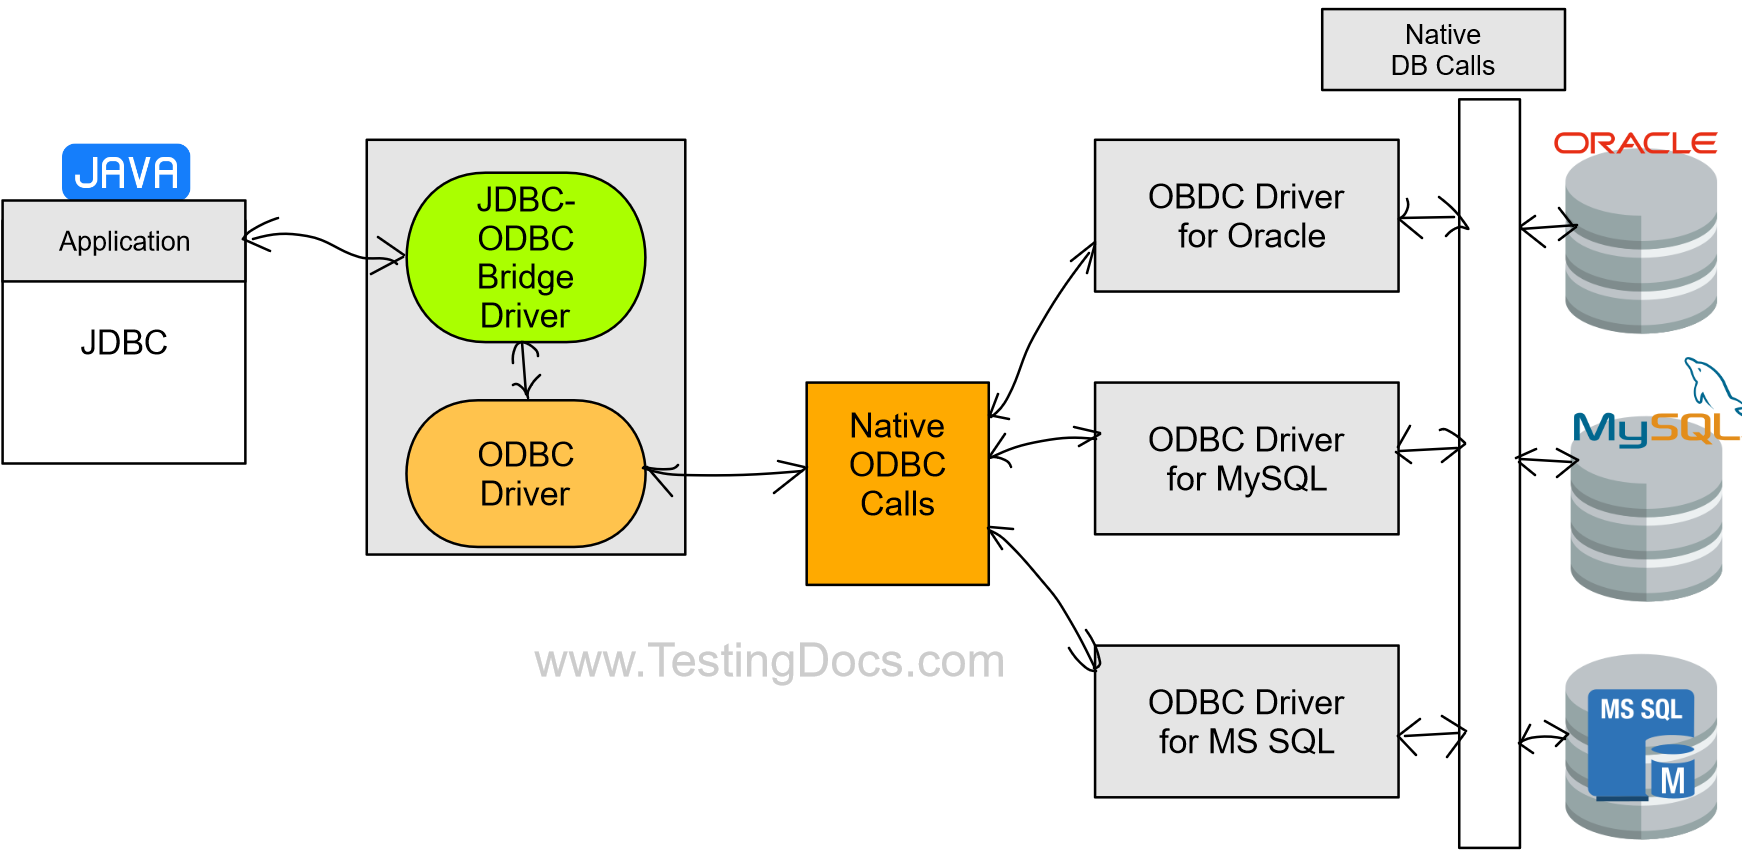 JBDC-ODBC Bridge Driver